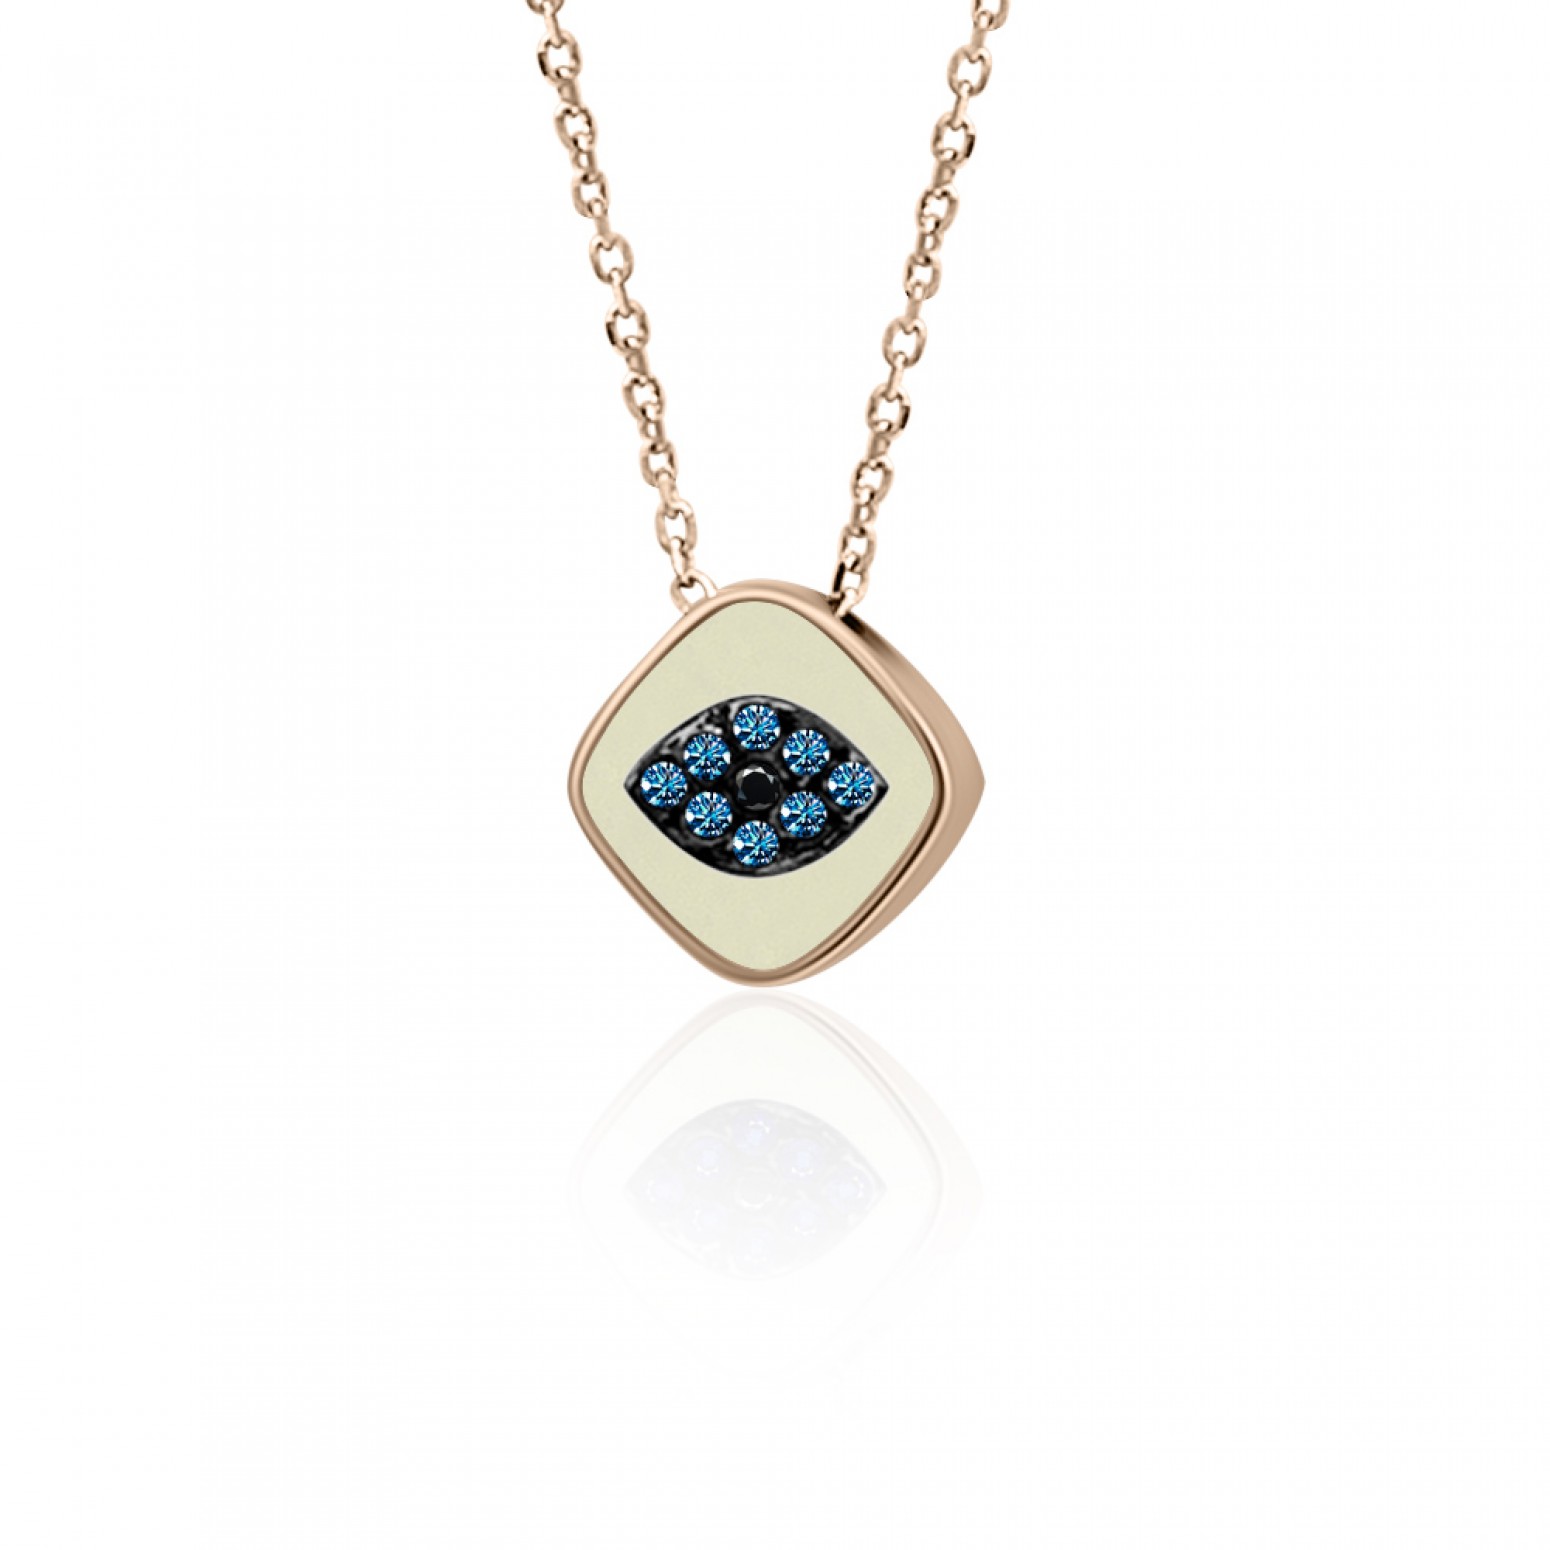 Eye necklace, Κ9 pink gold with blue, black zircon and enamel, ko4936 NECKLACES Κοσμηματα - chrilia.gr